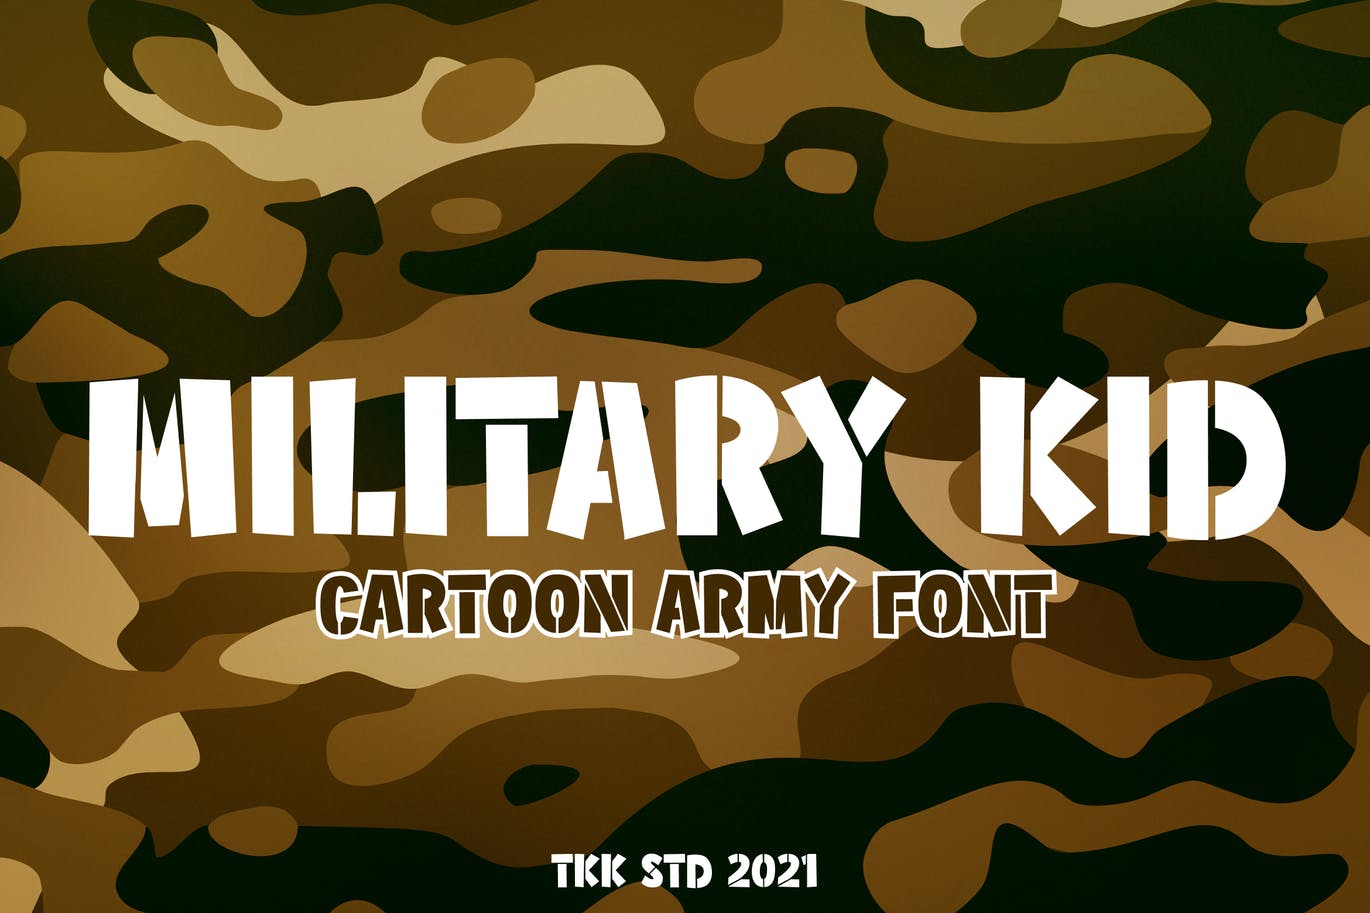 A military cartoon font